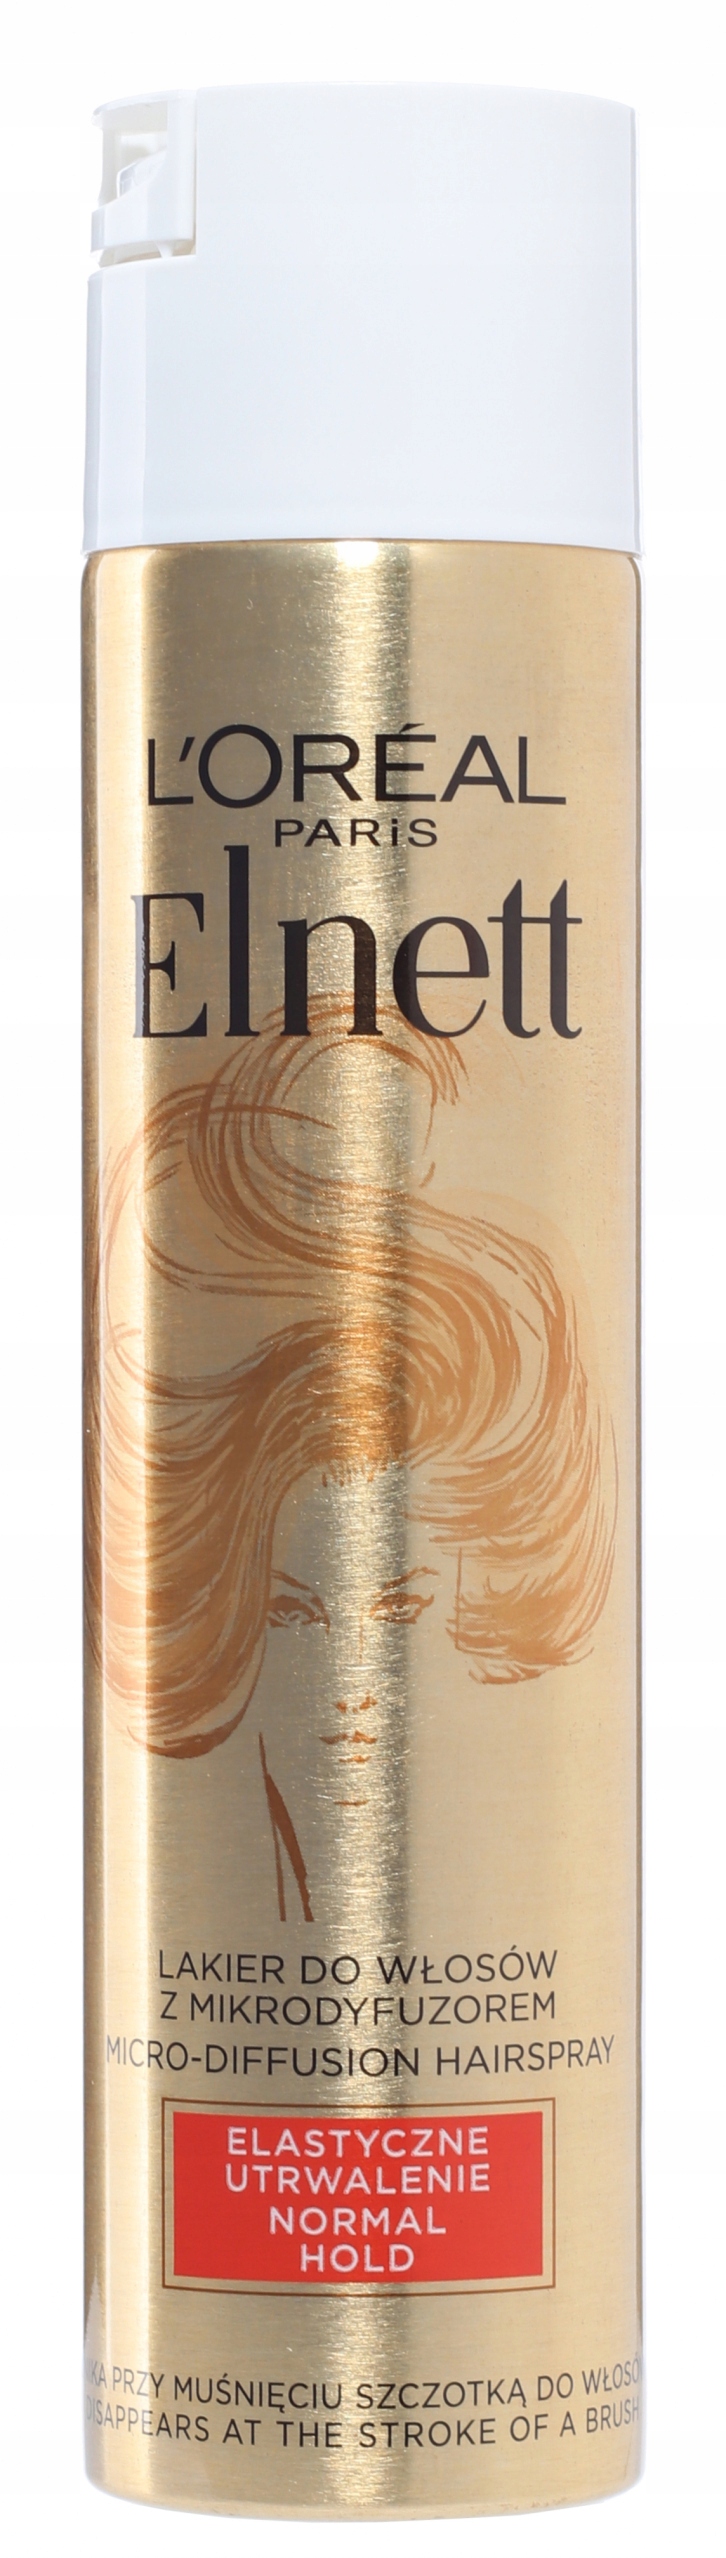 lakier do włosów loreal ellnet camelina oil